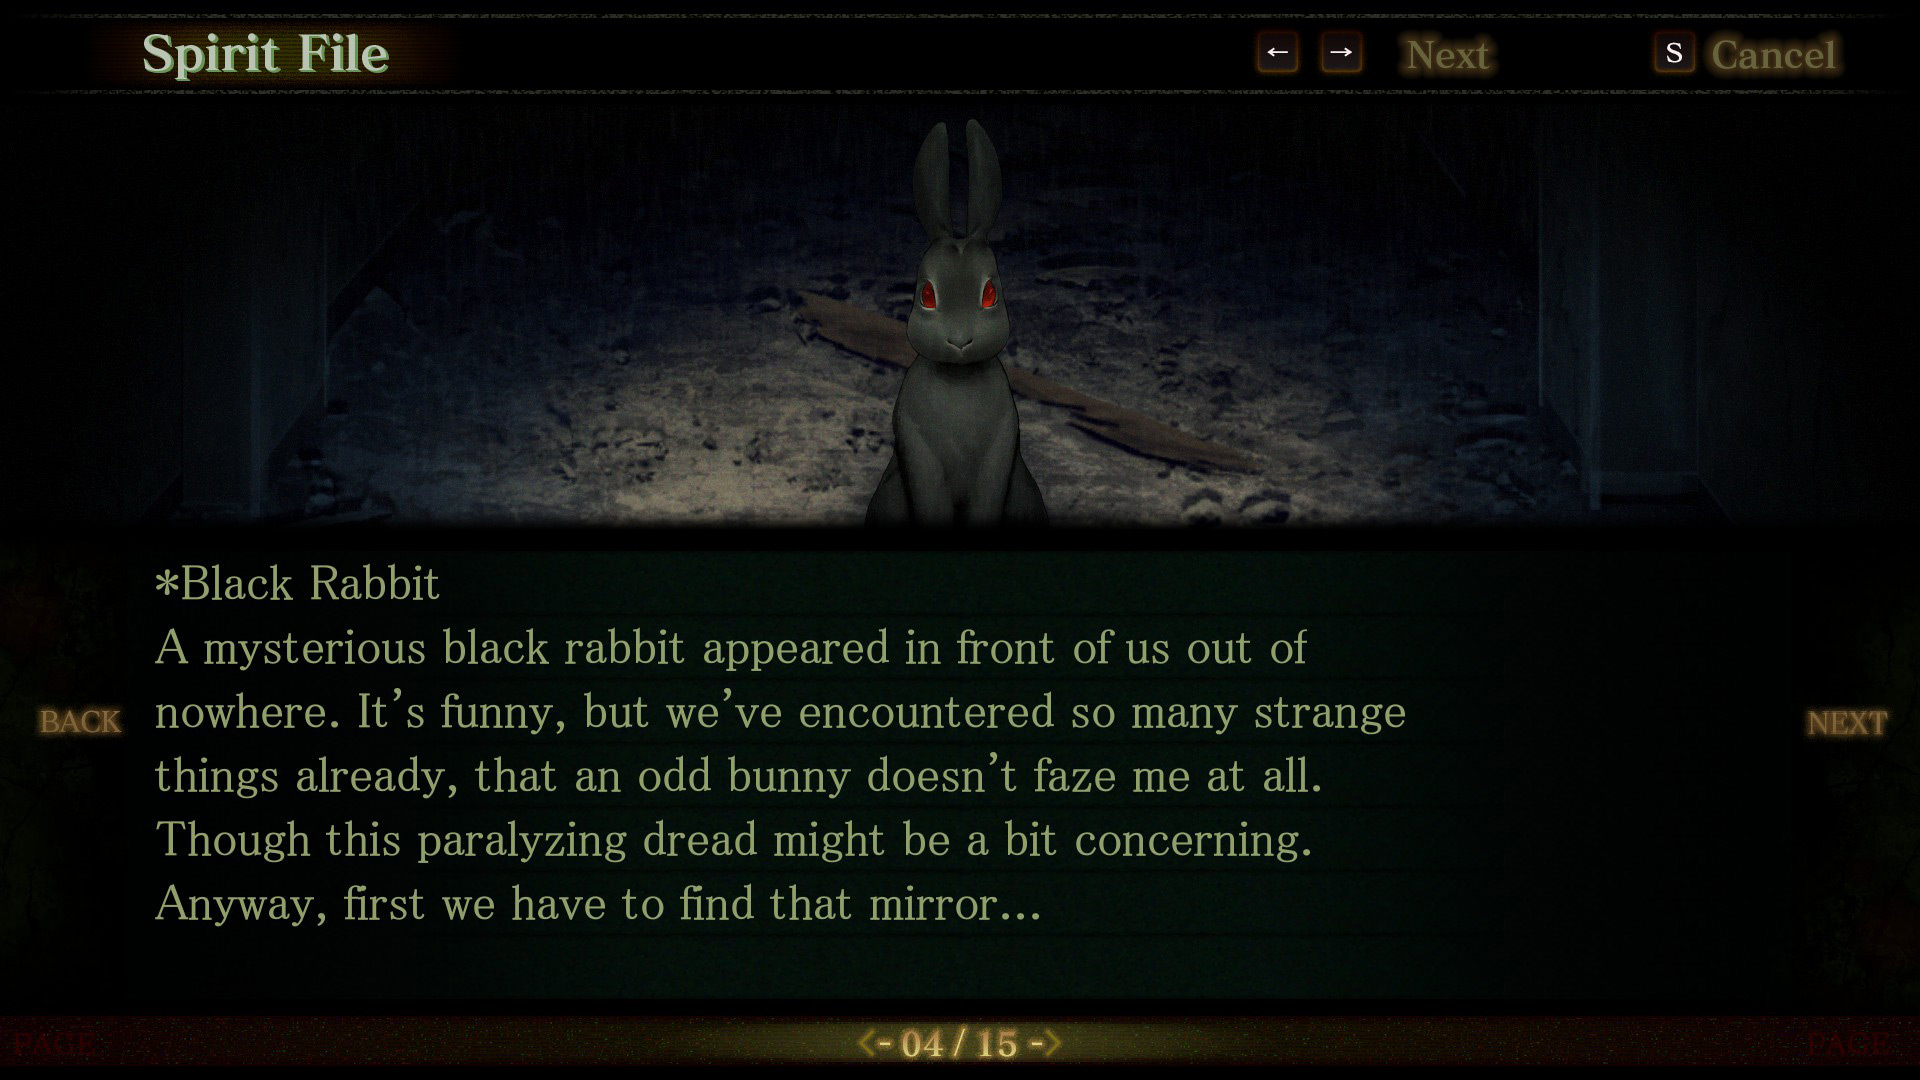 Spirit Hunter: Death Mark screenshot